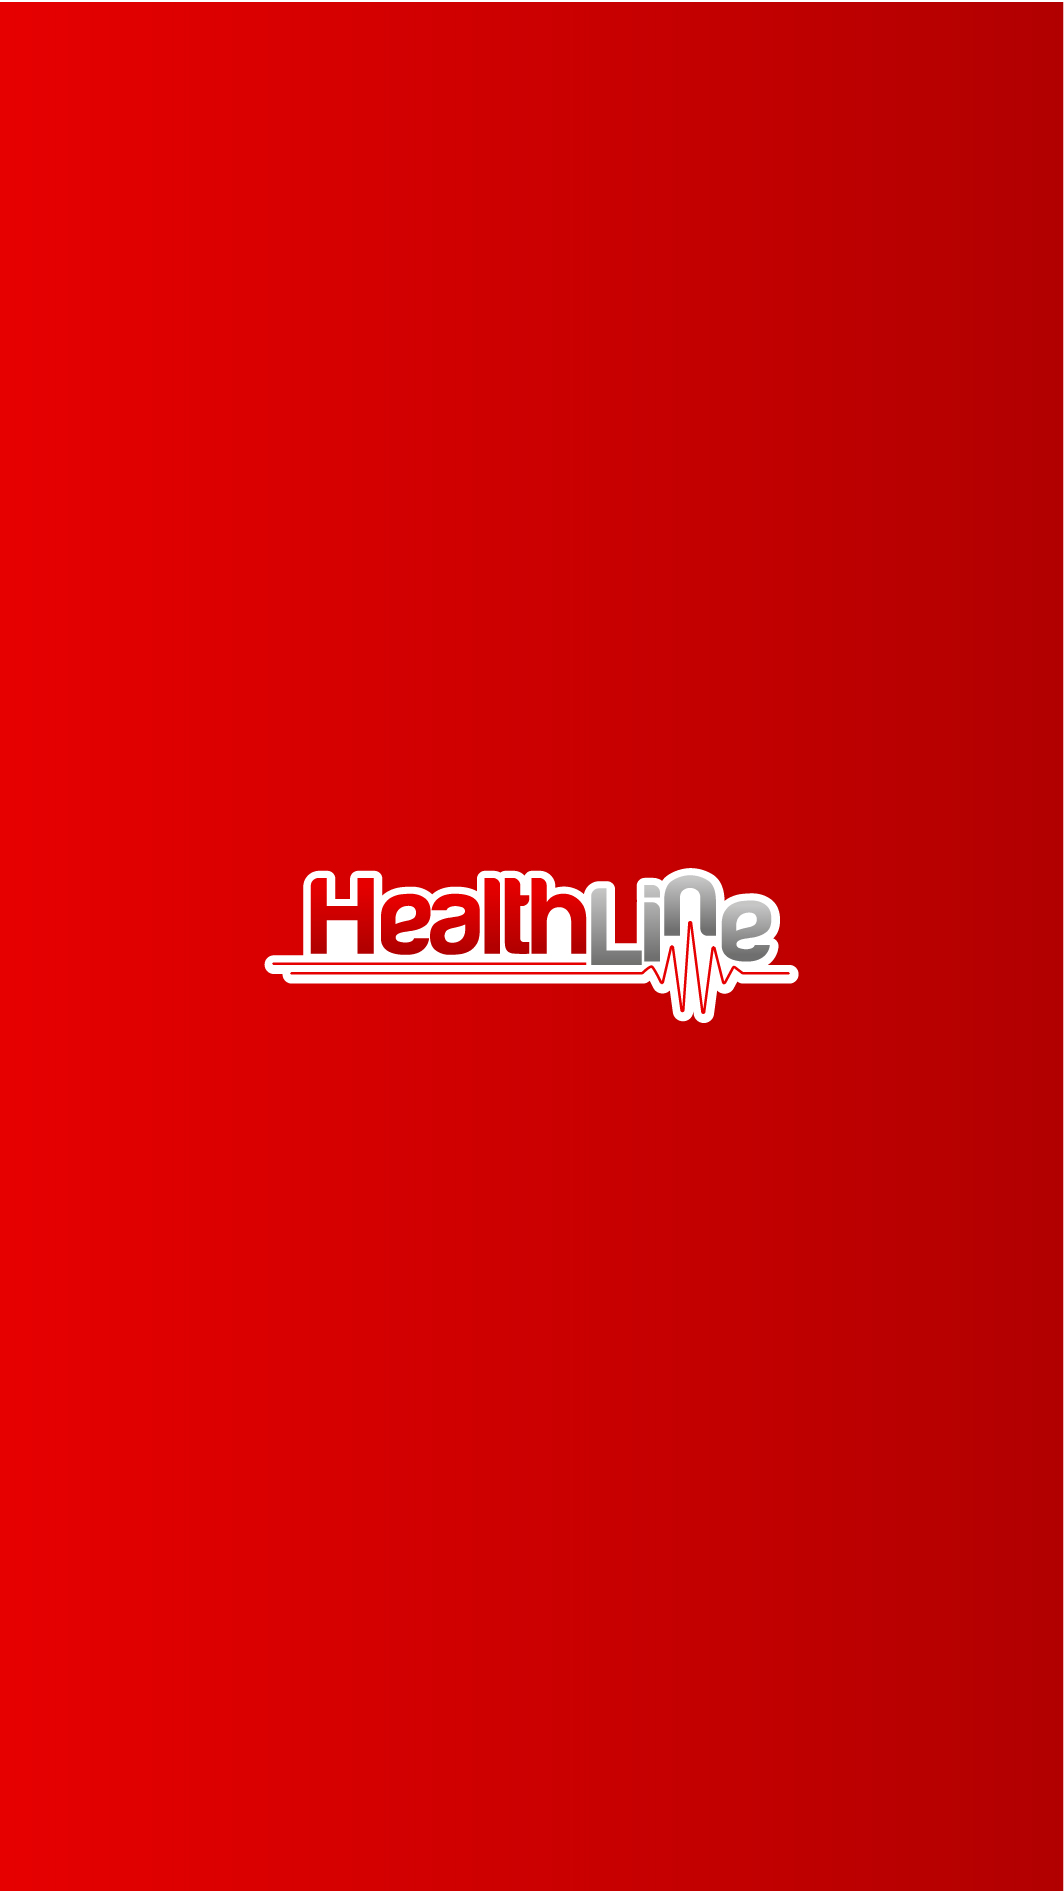 Vodafone Healthline logo